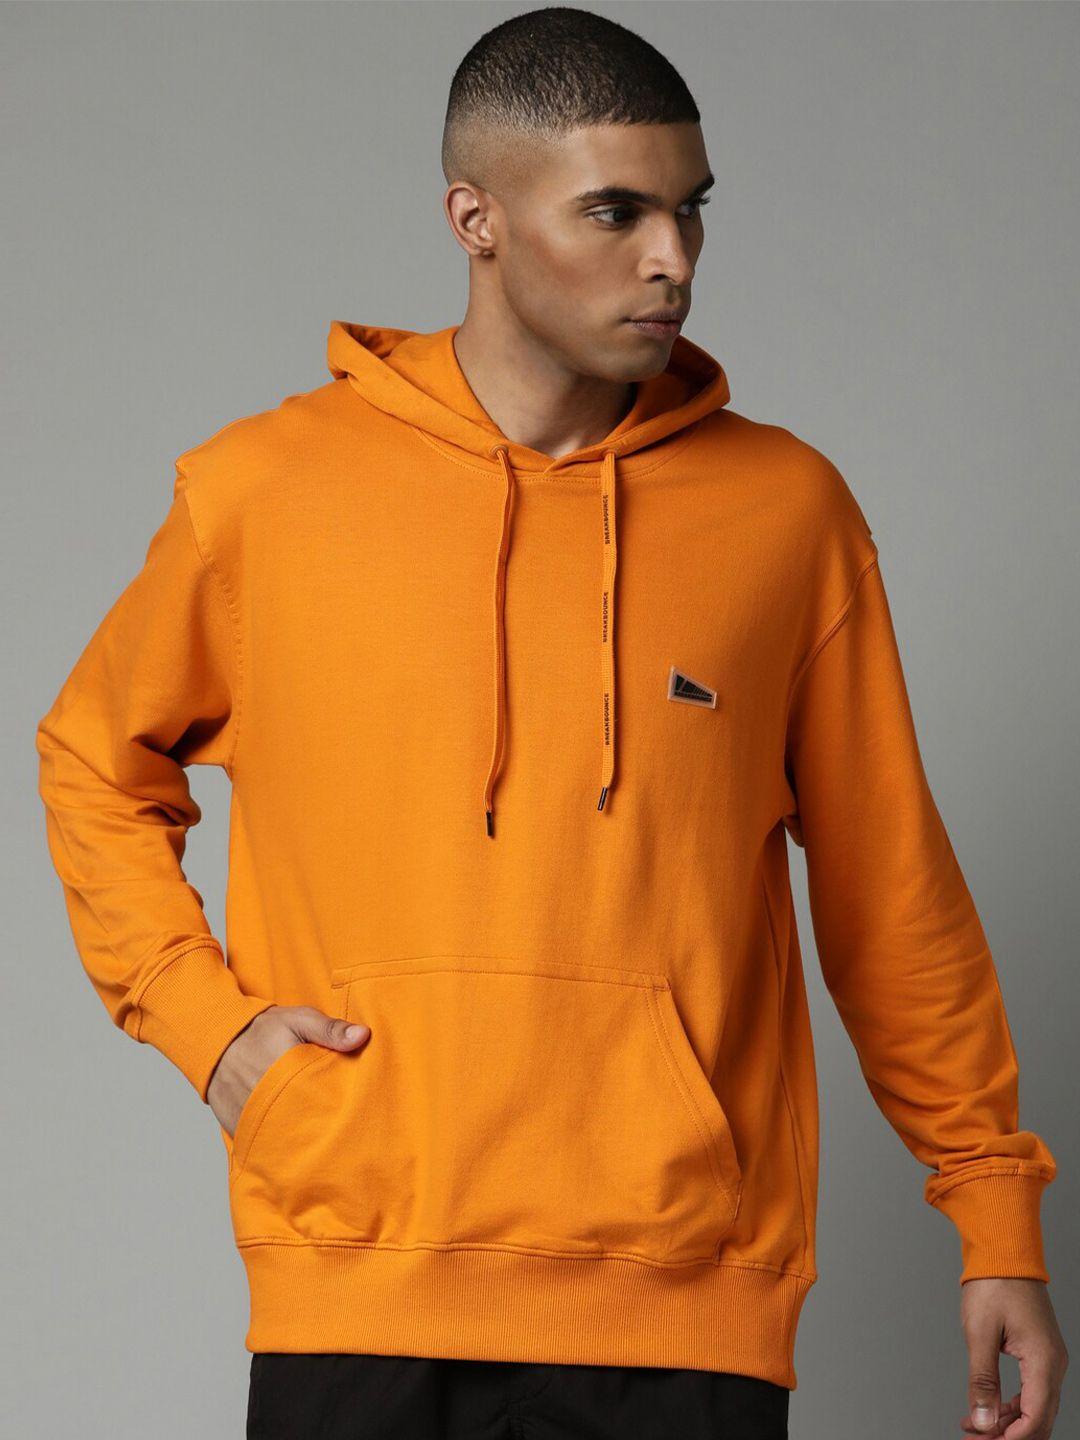 breakbounce-men-orange-hooded-pure-cotton-sweatshirt